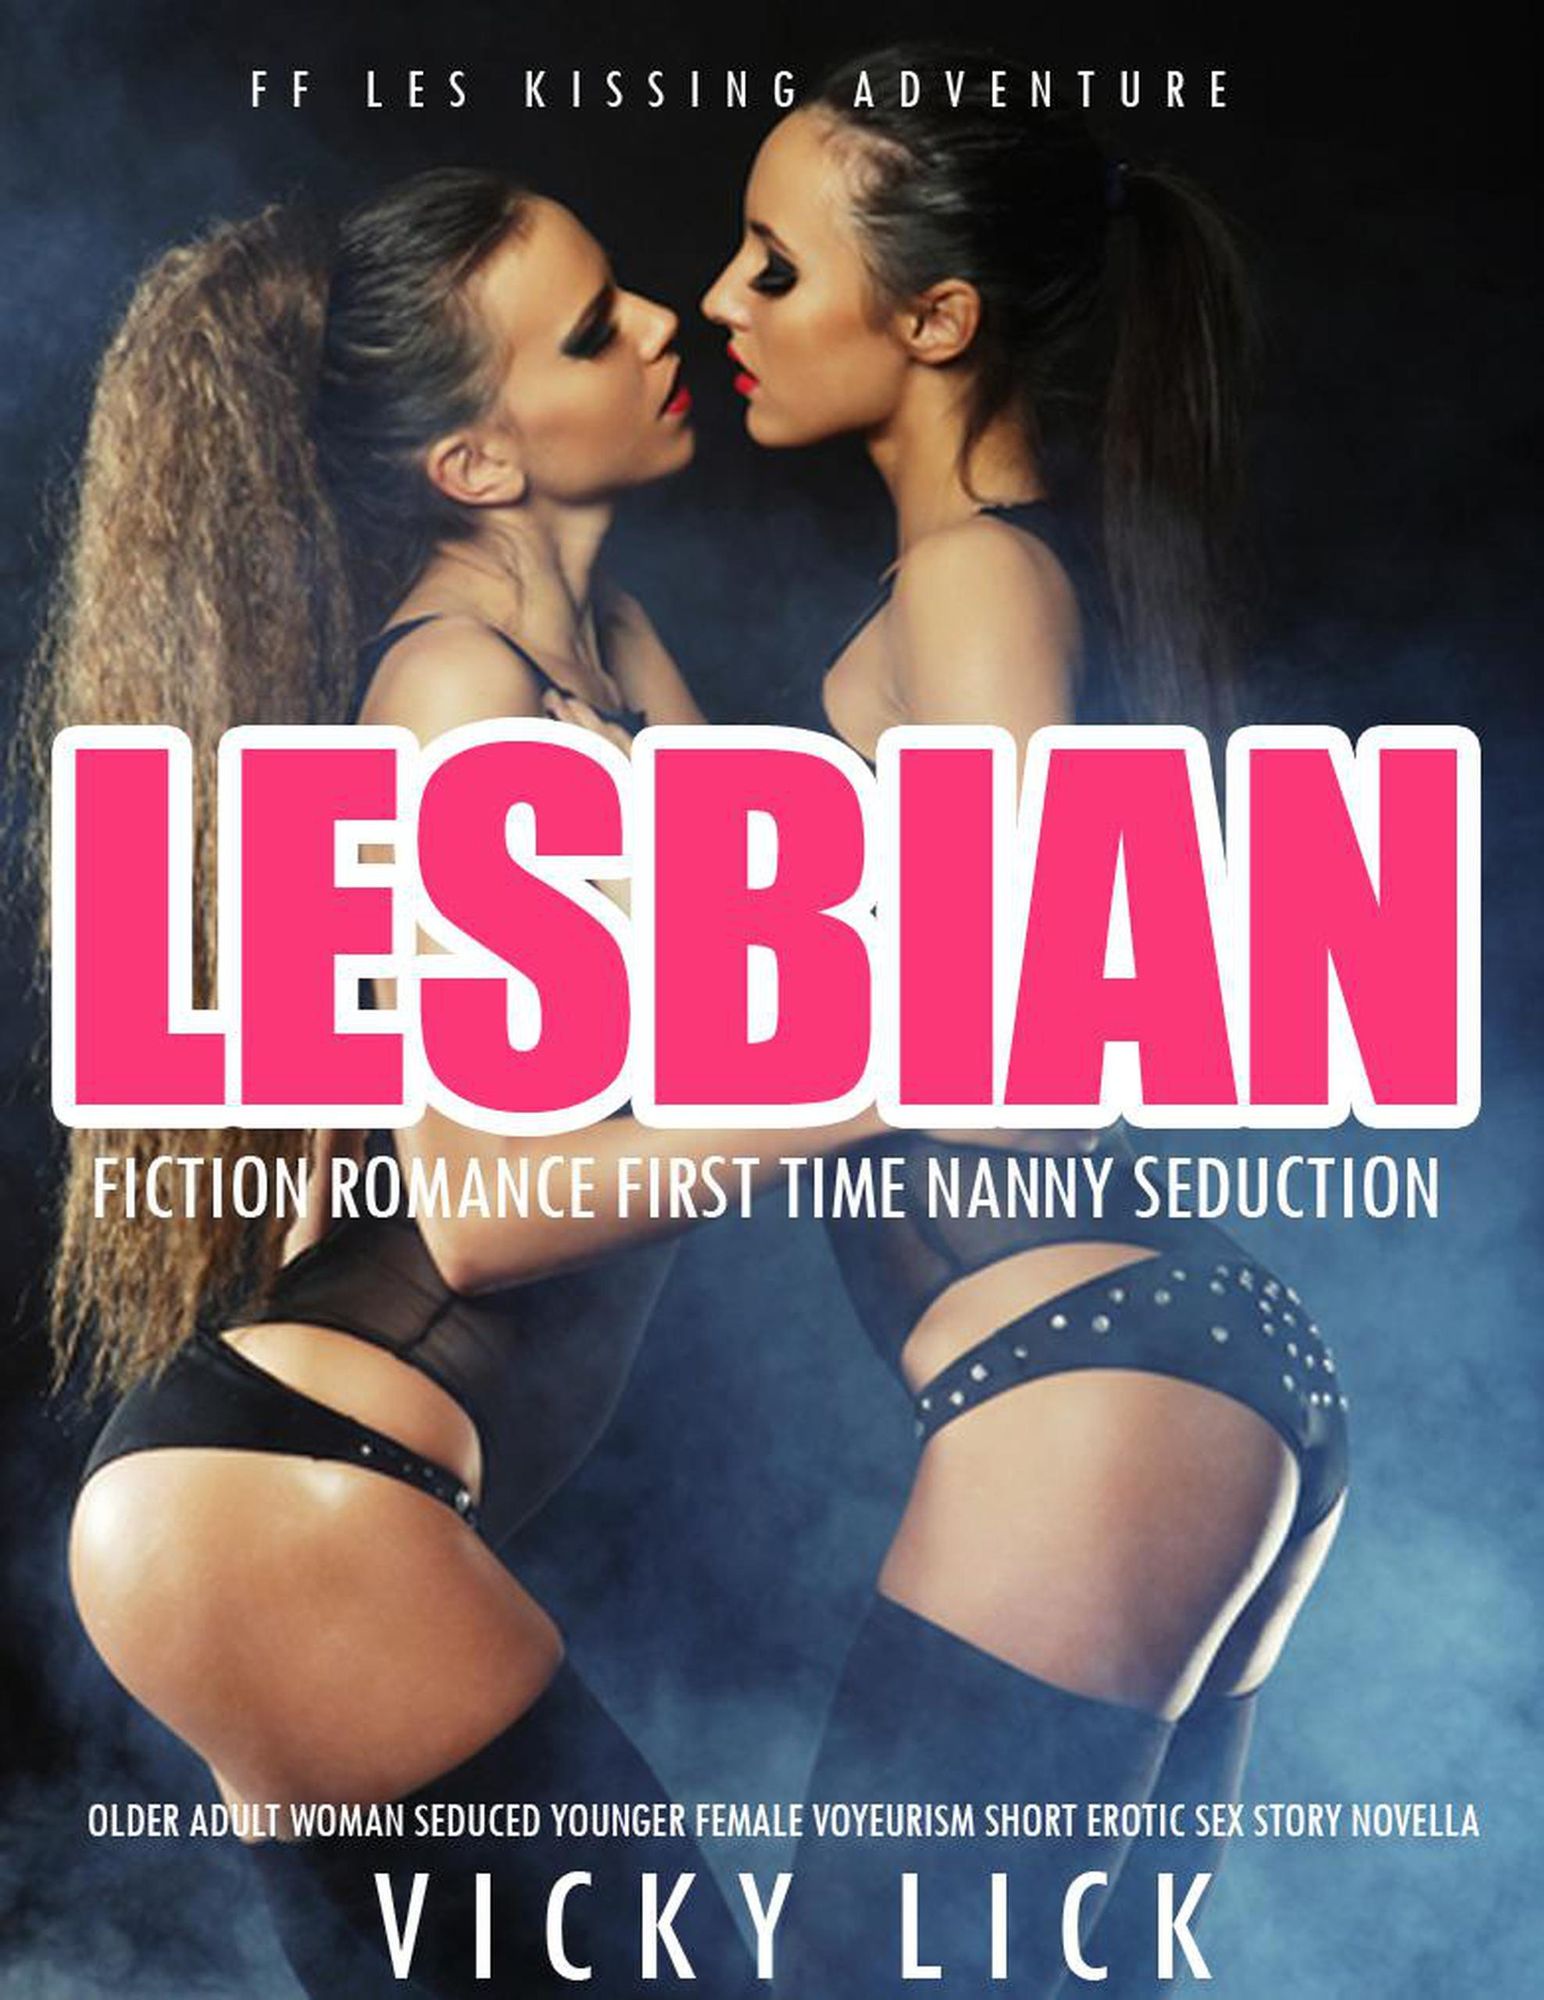 Lesbian Fiction Romance First Time Nanny Seduction Older Adult Woman Seduced Younger Female Voyeurism Short Erotic Sex Story Novella (FF Les Kissing A von Vicky Lick